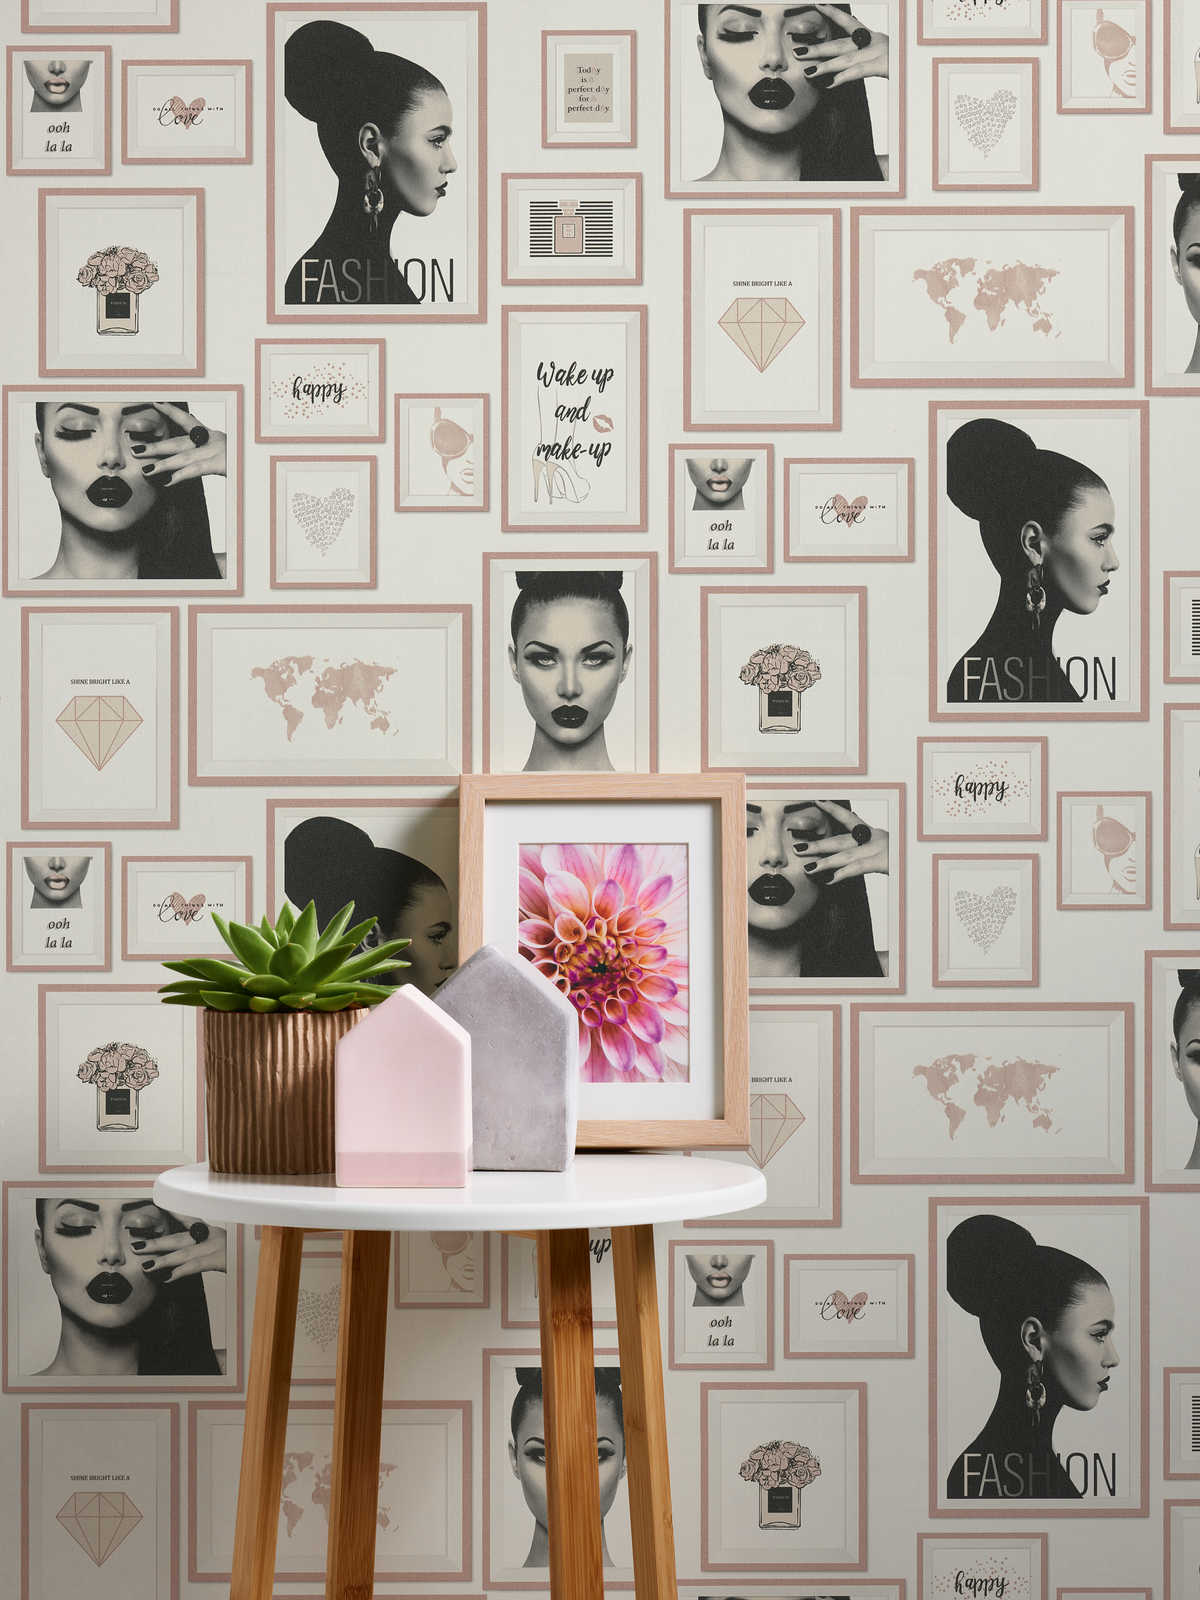             Wallpaper Fashion Design with wall decor - pink, black, white
        